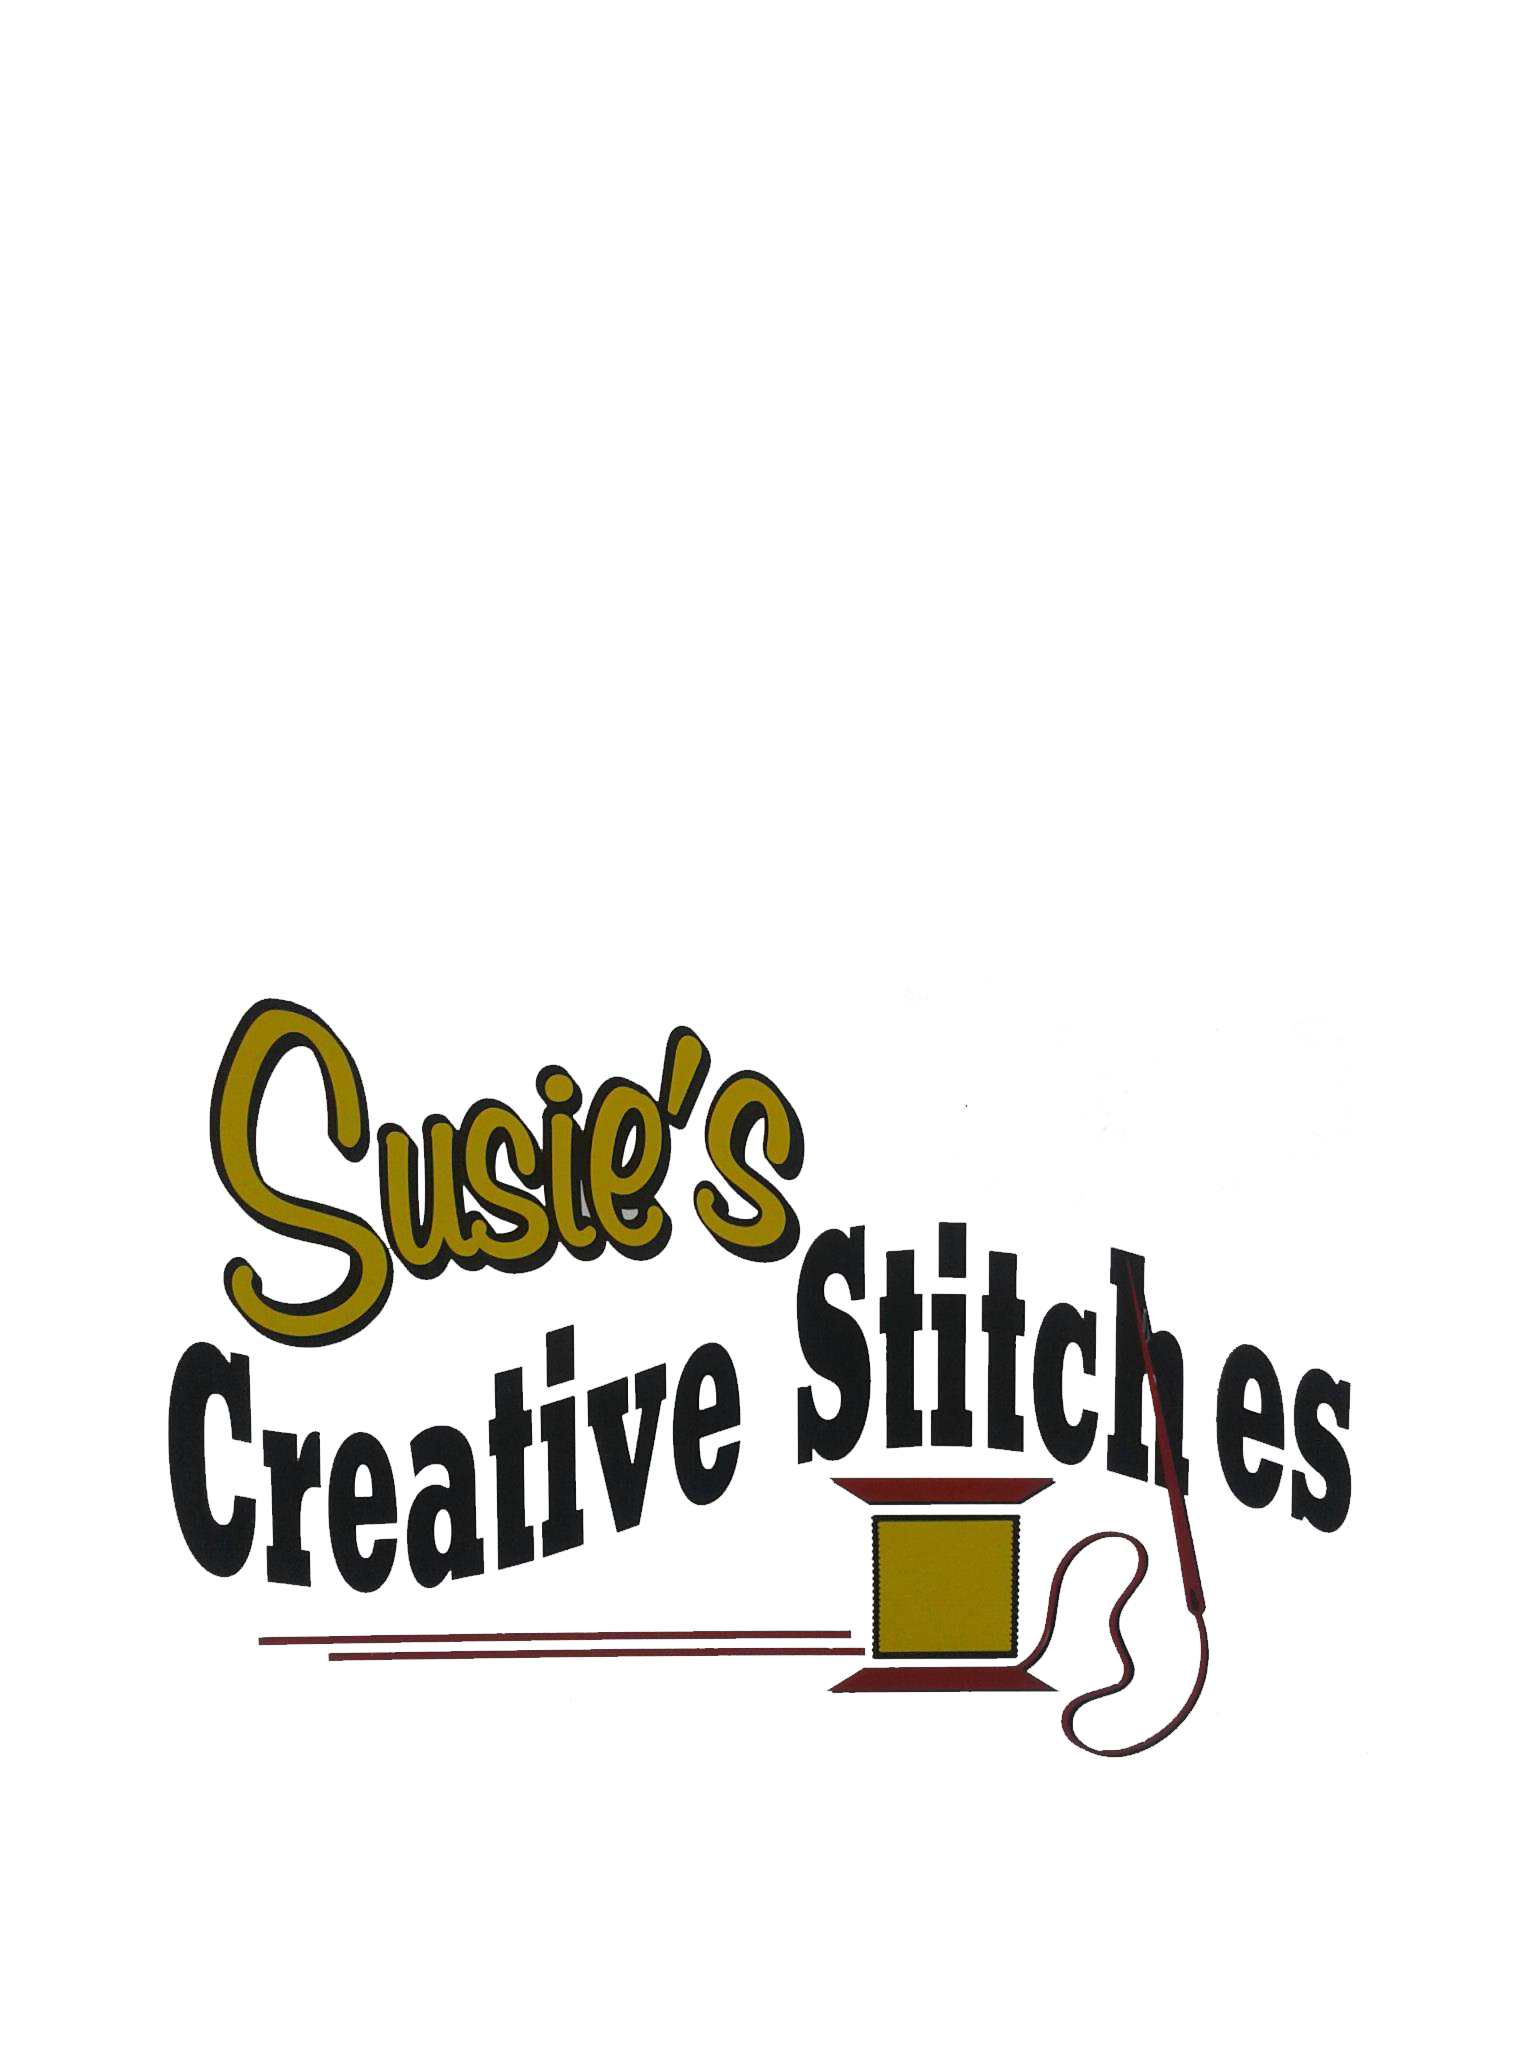 Susies Creative Stiches logo